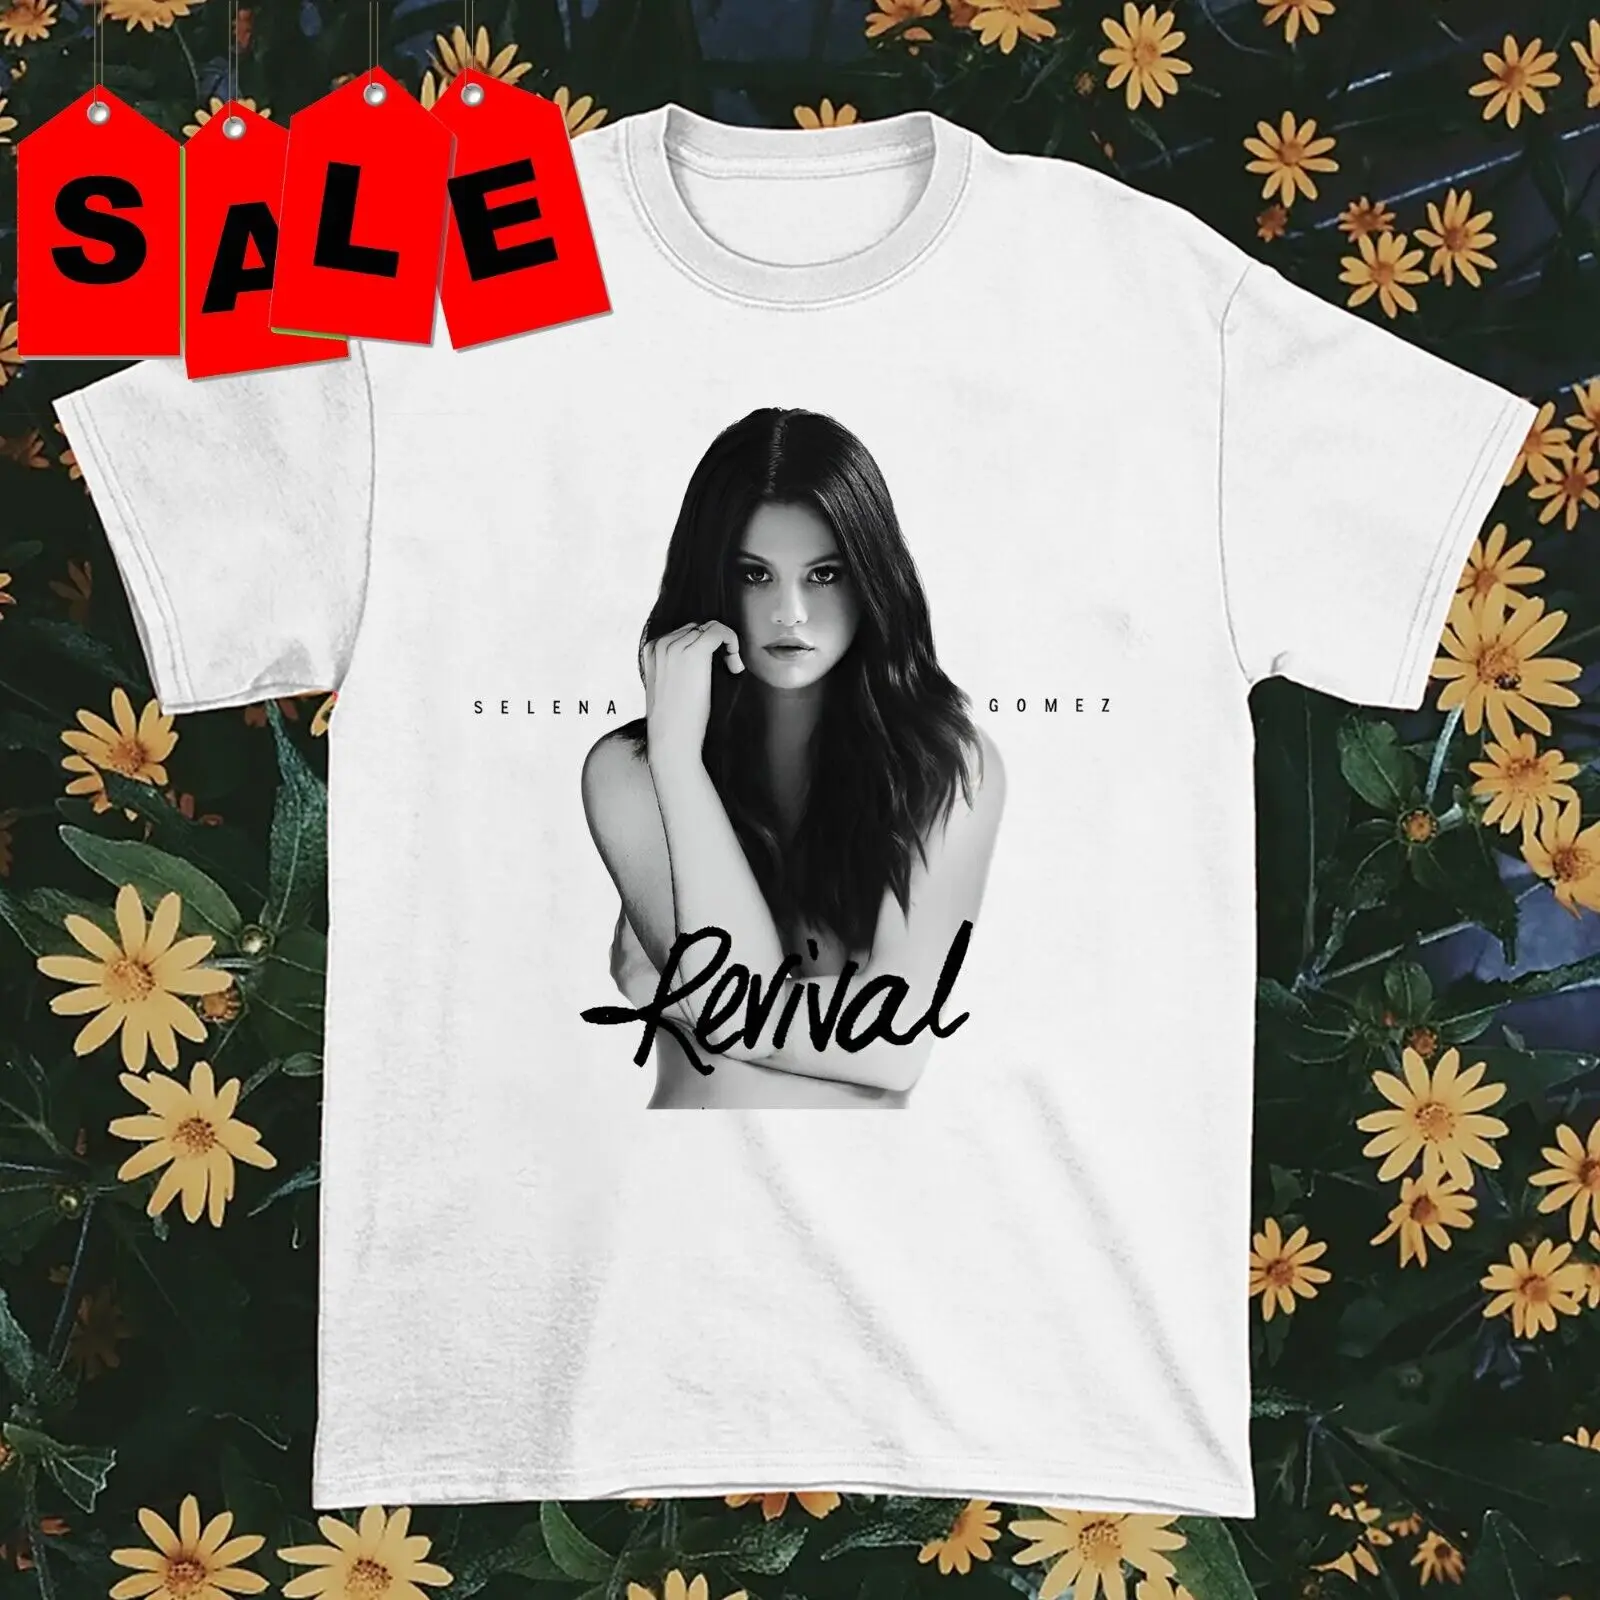 Горячая рубашка Selena Gomez S M L XL 5XL, новая редкая футболка унисекс S-235XL, 1D1970